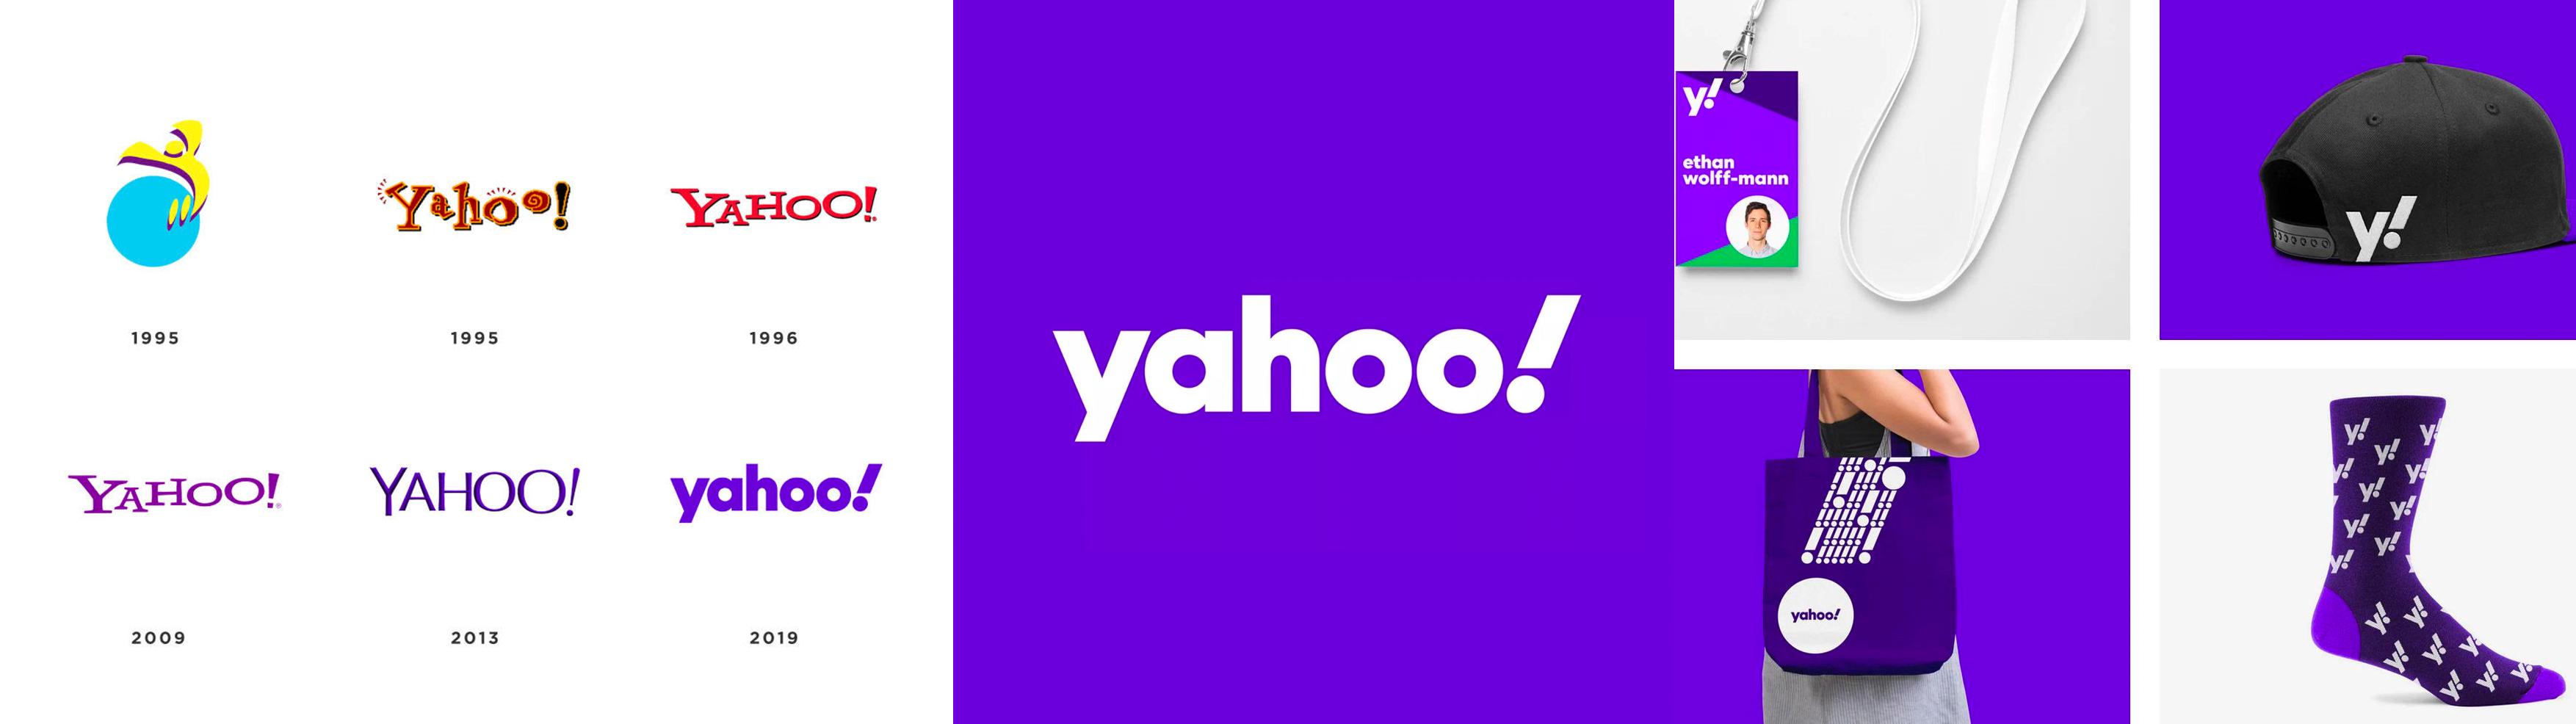 yahoo branding update rebrand development design style logo icon